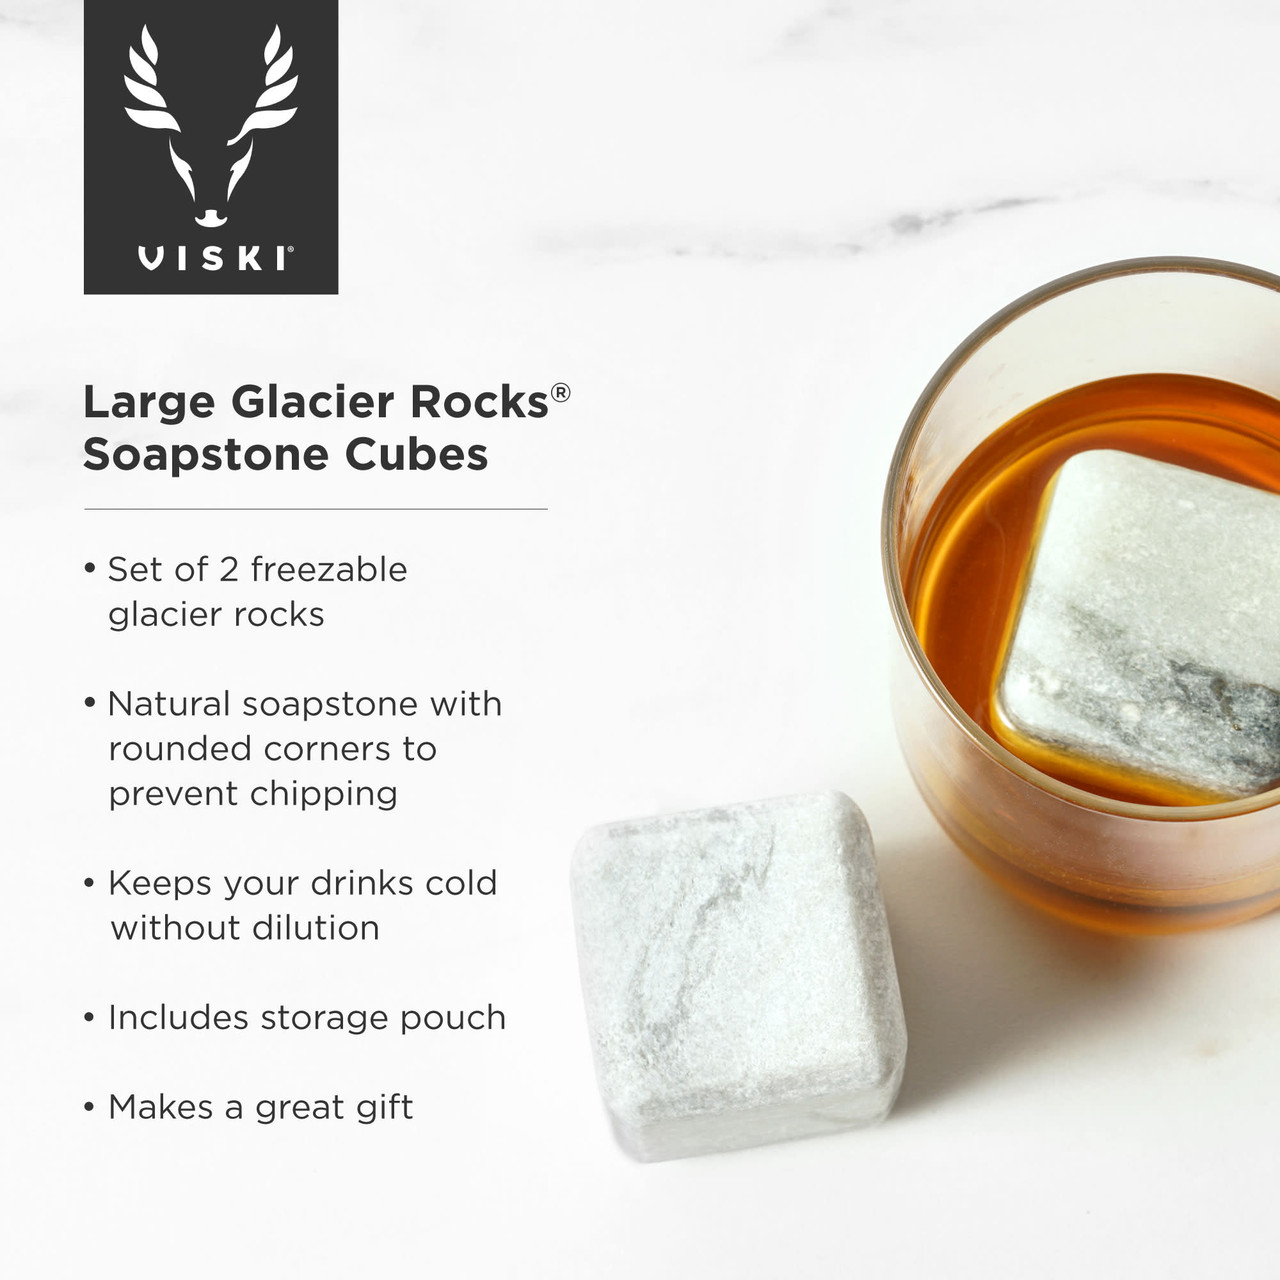 Large Glacier Rocks Soapstone Cubes by Viski